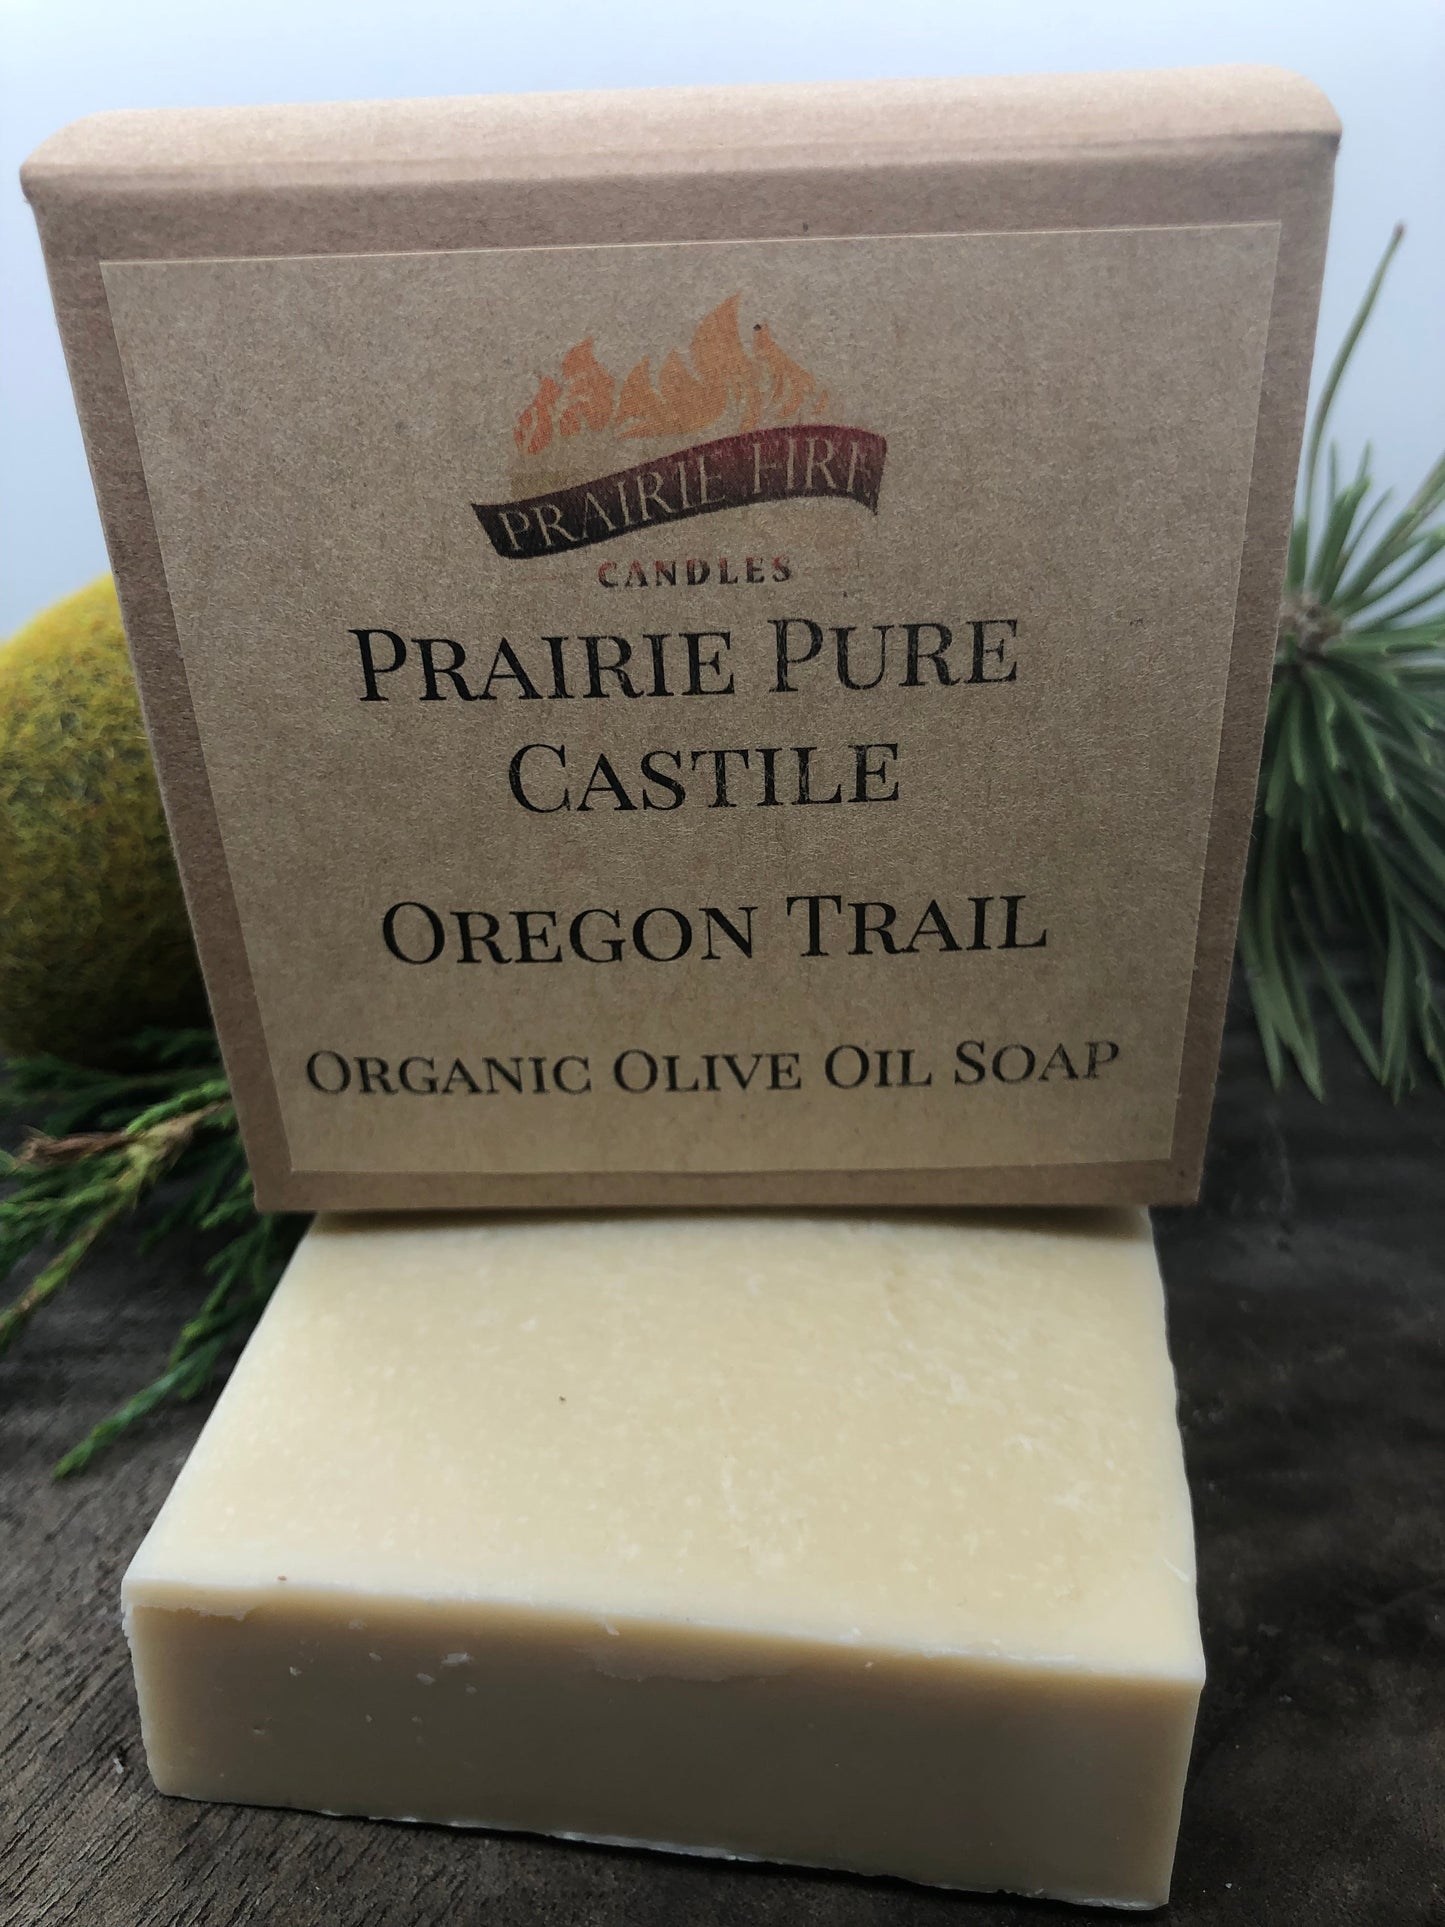 Oregon Trail Real Castile Organic Olive Oil Soap for Sensitive Skin - Dye Free - 100% Certified Organic Extra Virgin Olive Oil